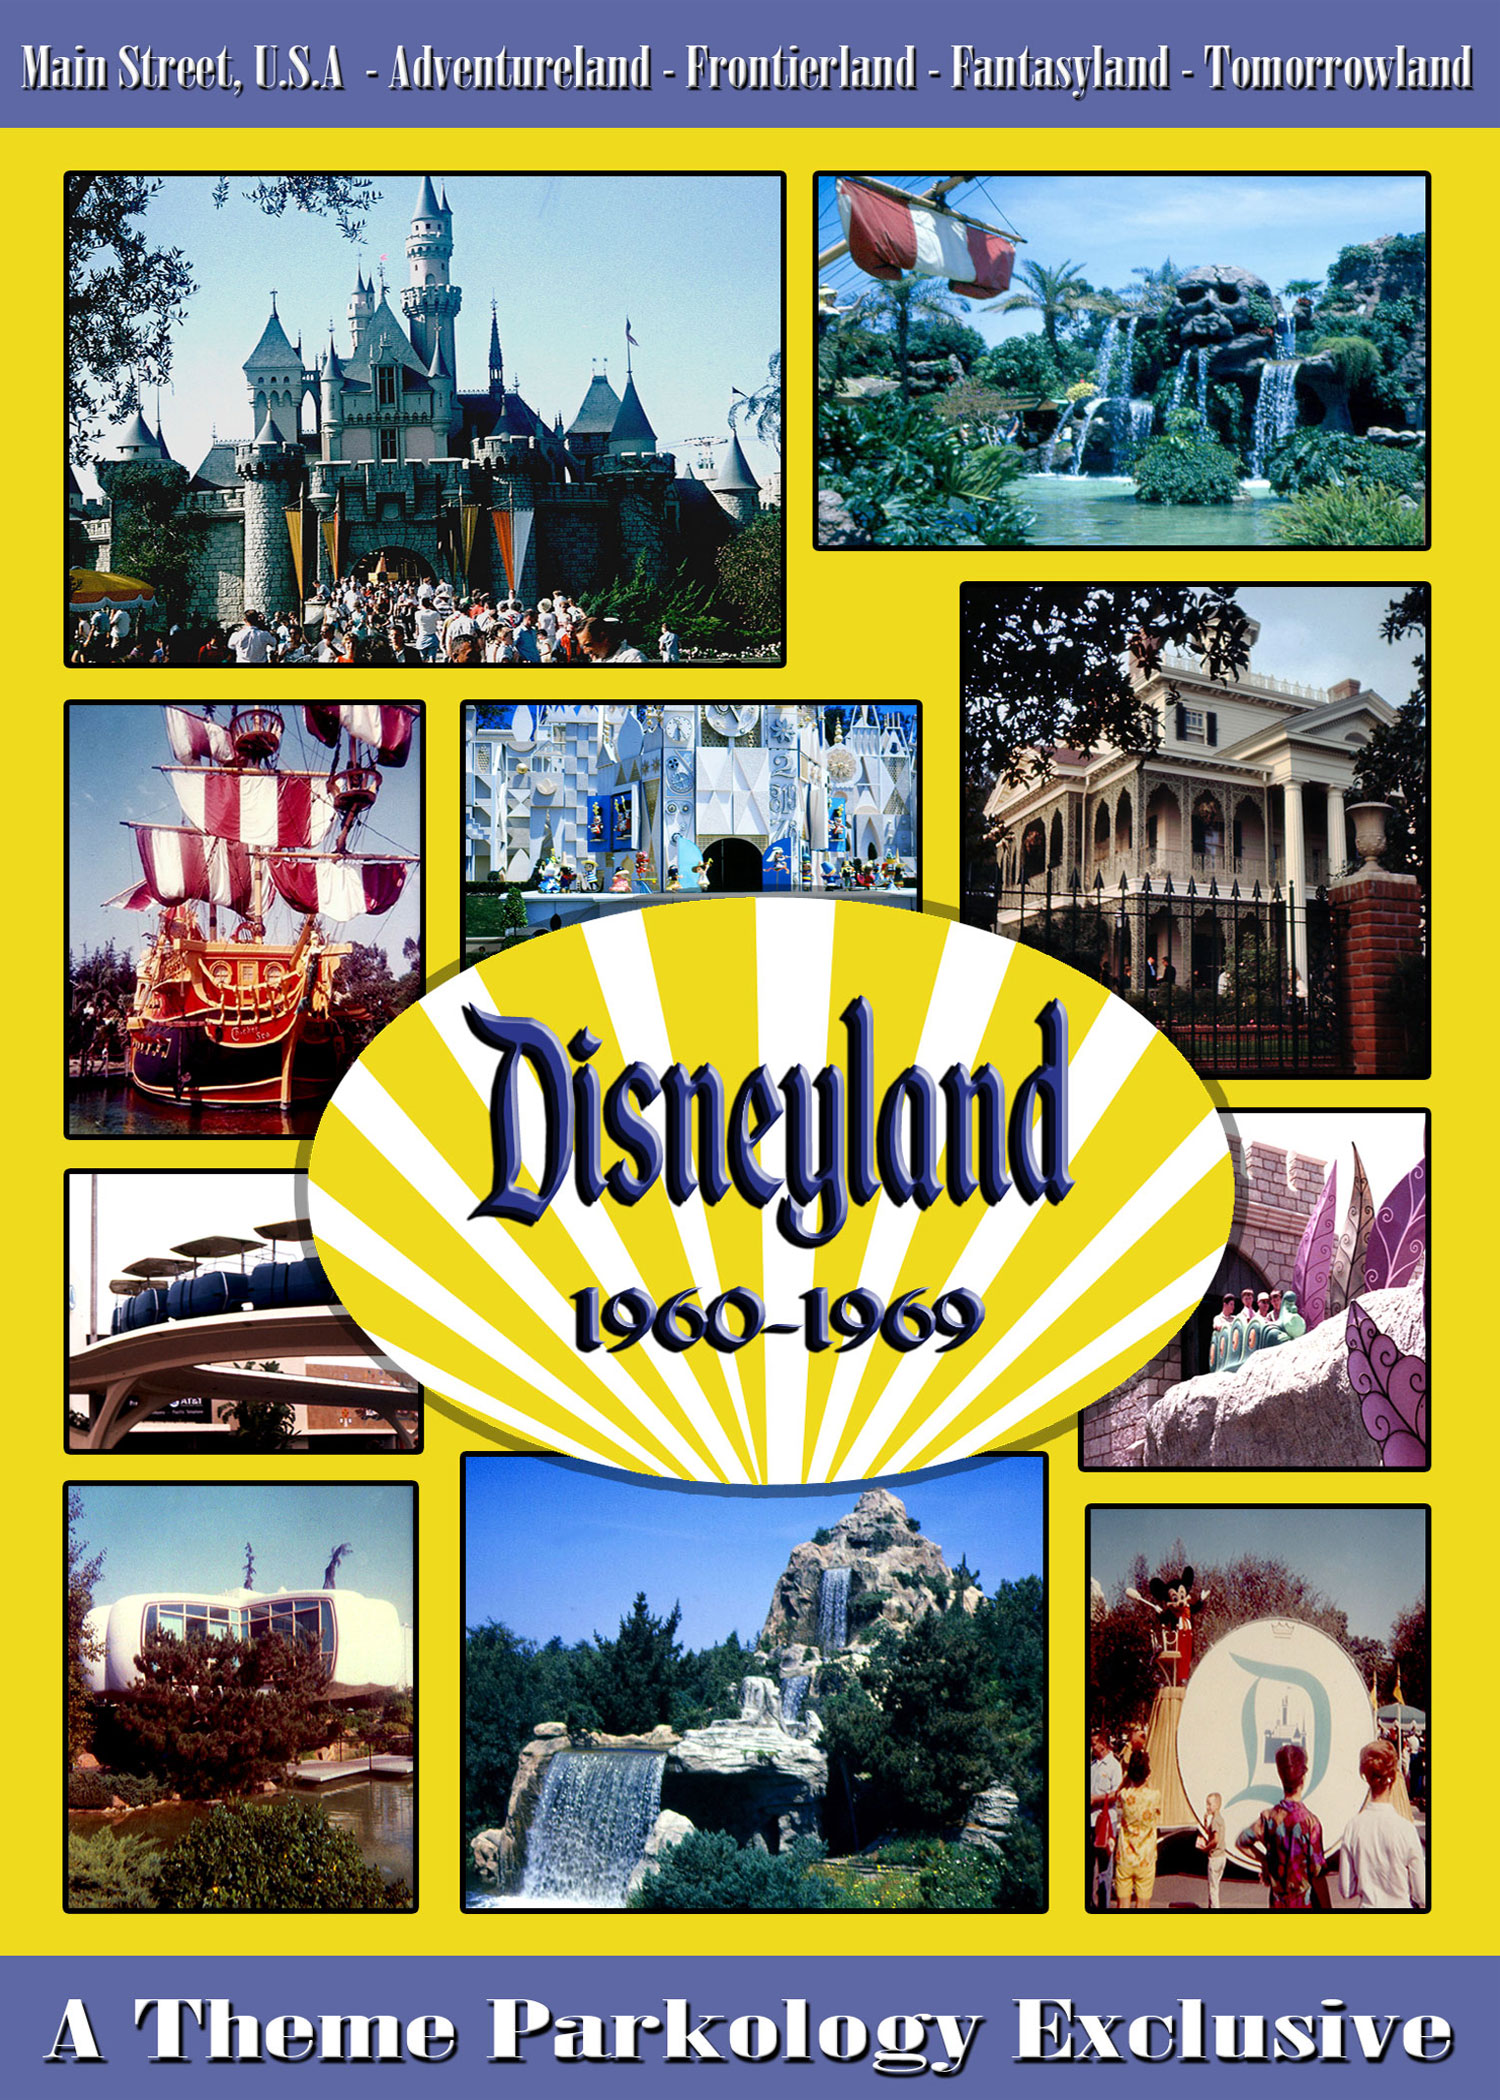 Disneyland 1960-1969 DVD